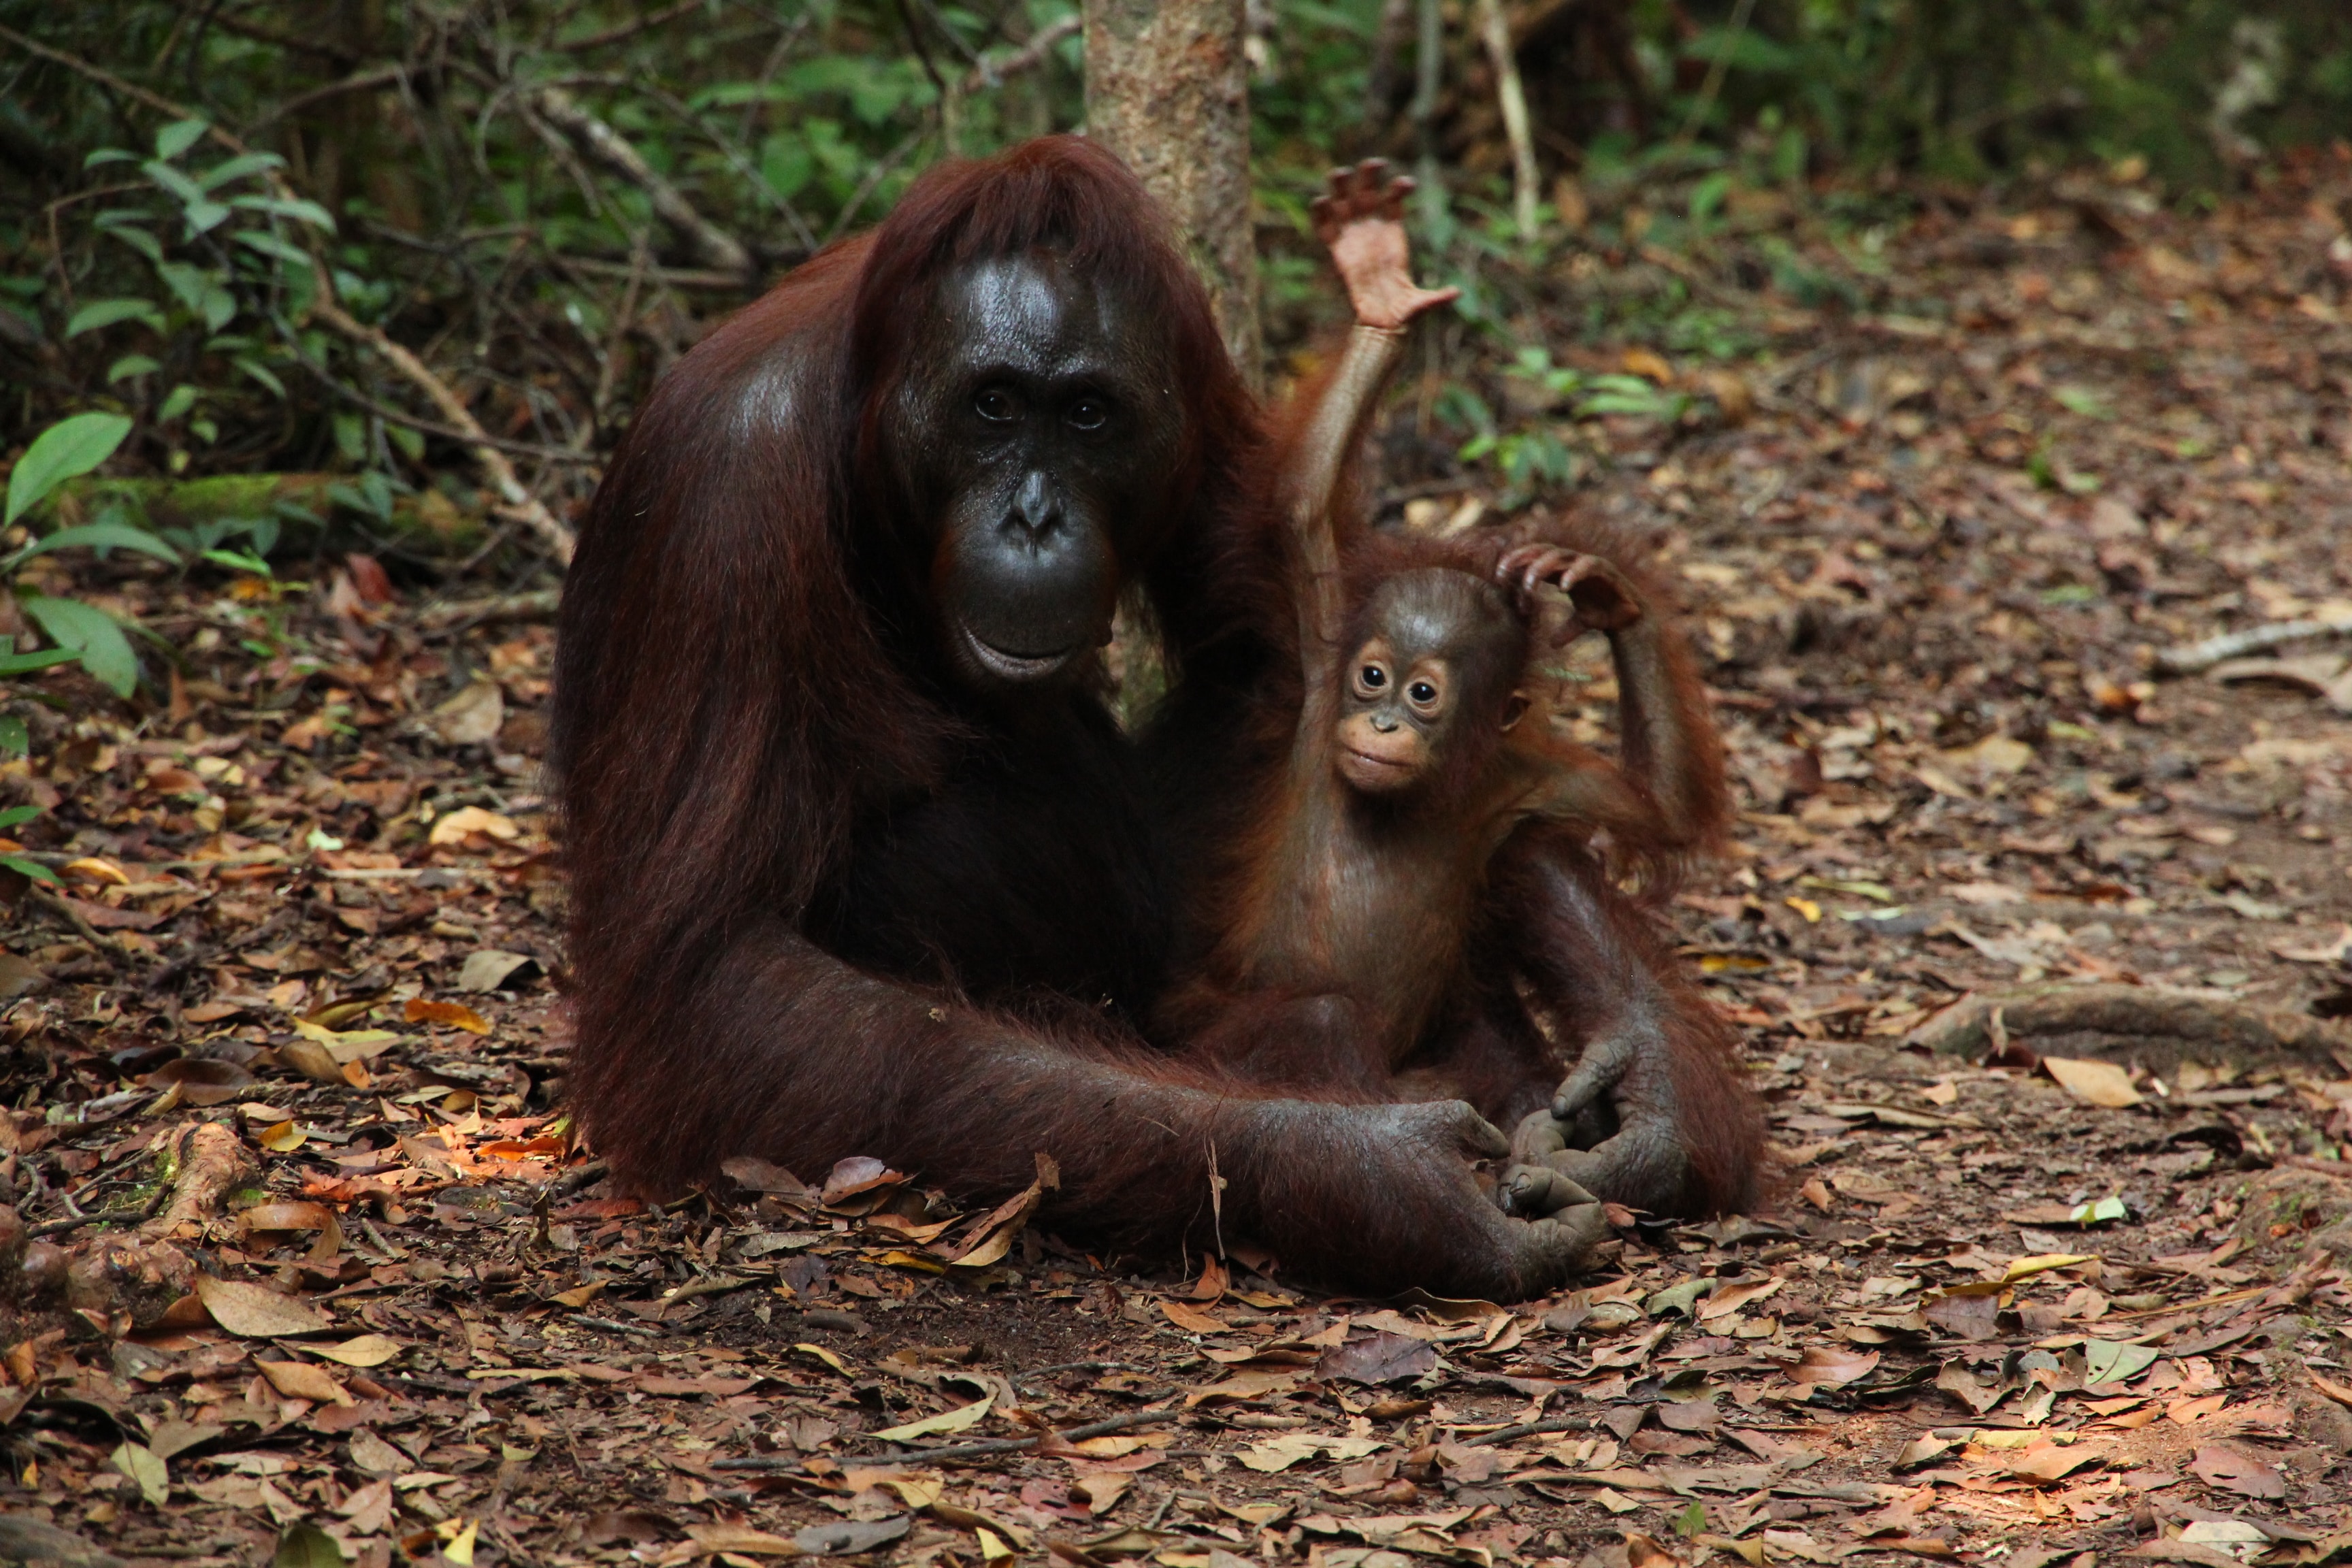 Orangutan and baby